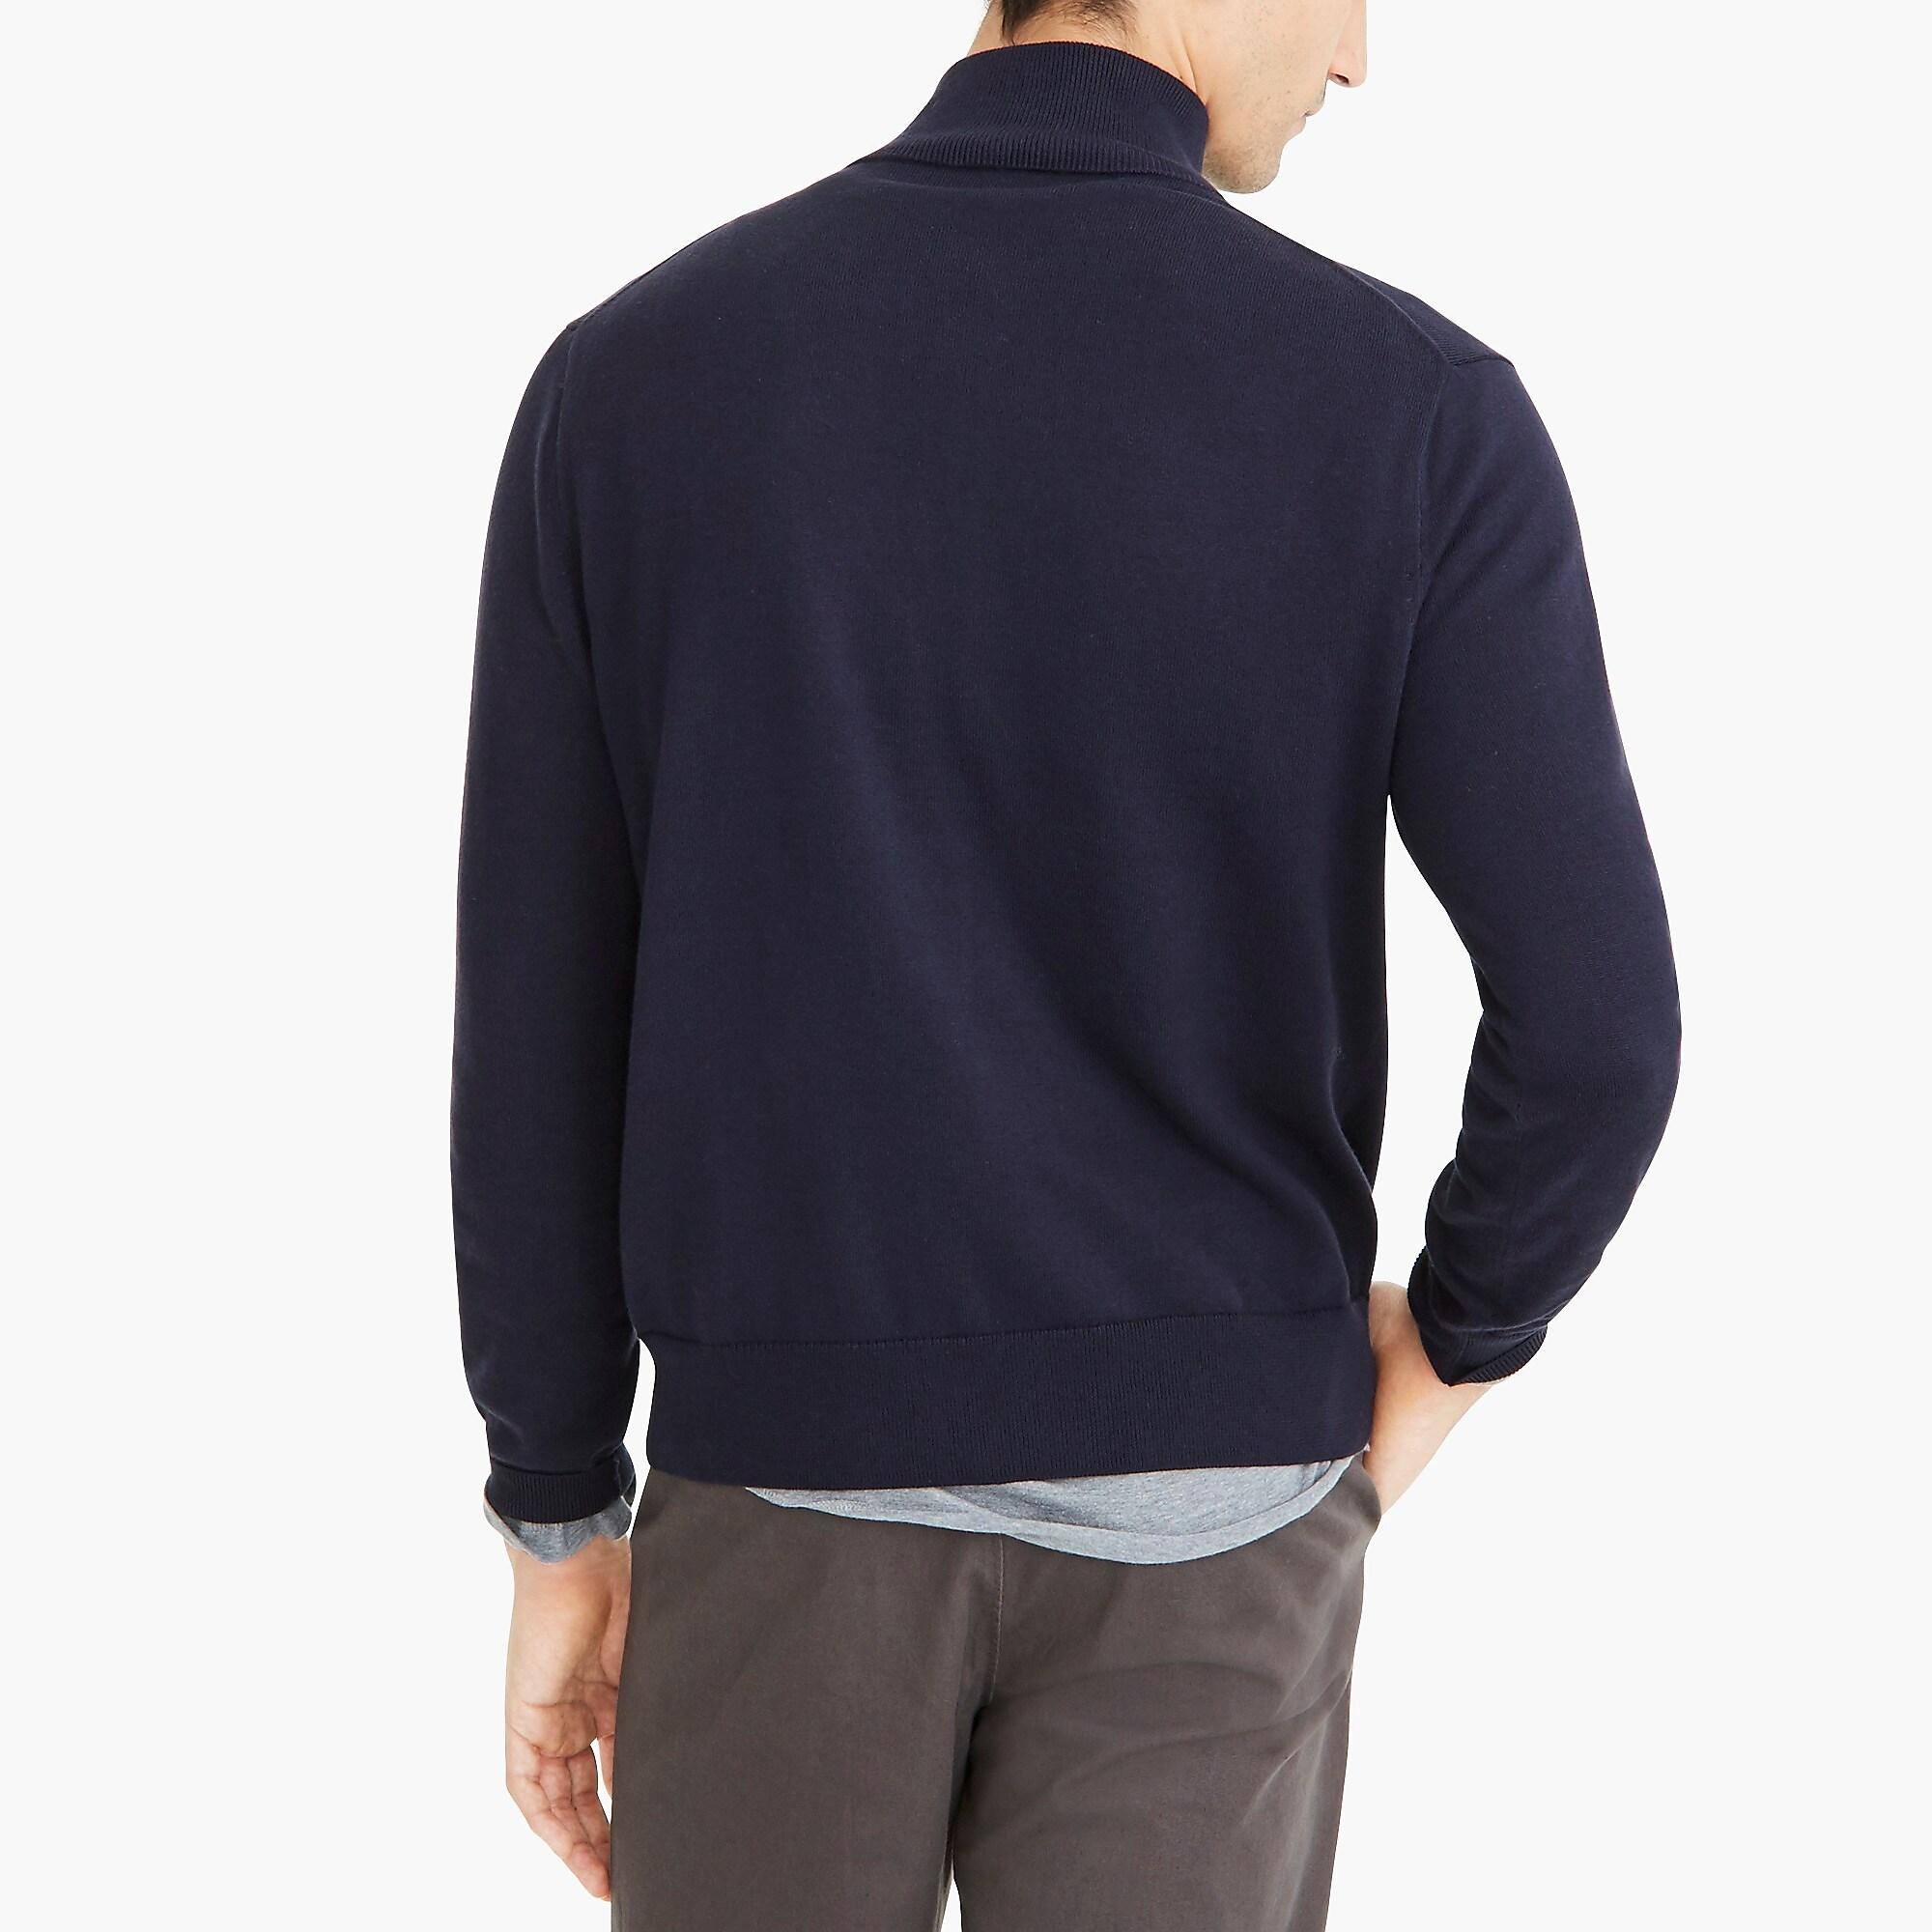 J.Crew Slim-fit Cotton Half-zip Pullover in Navy (Blue) for Men - Lyst